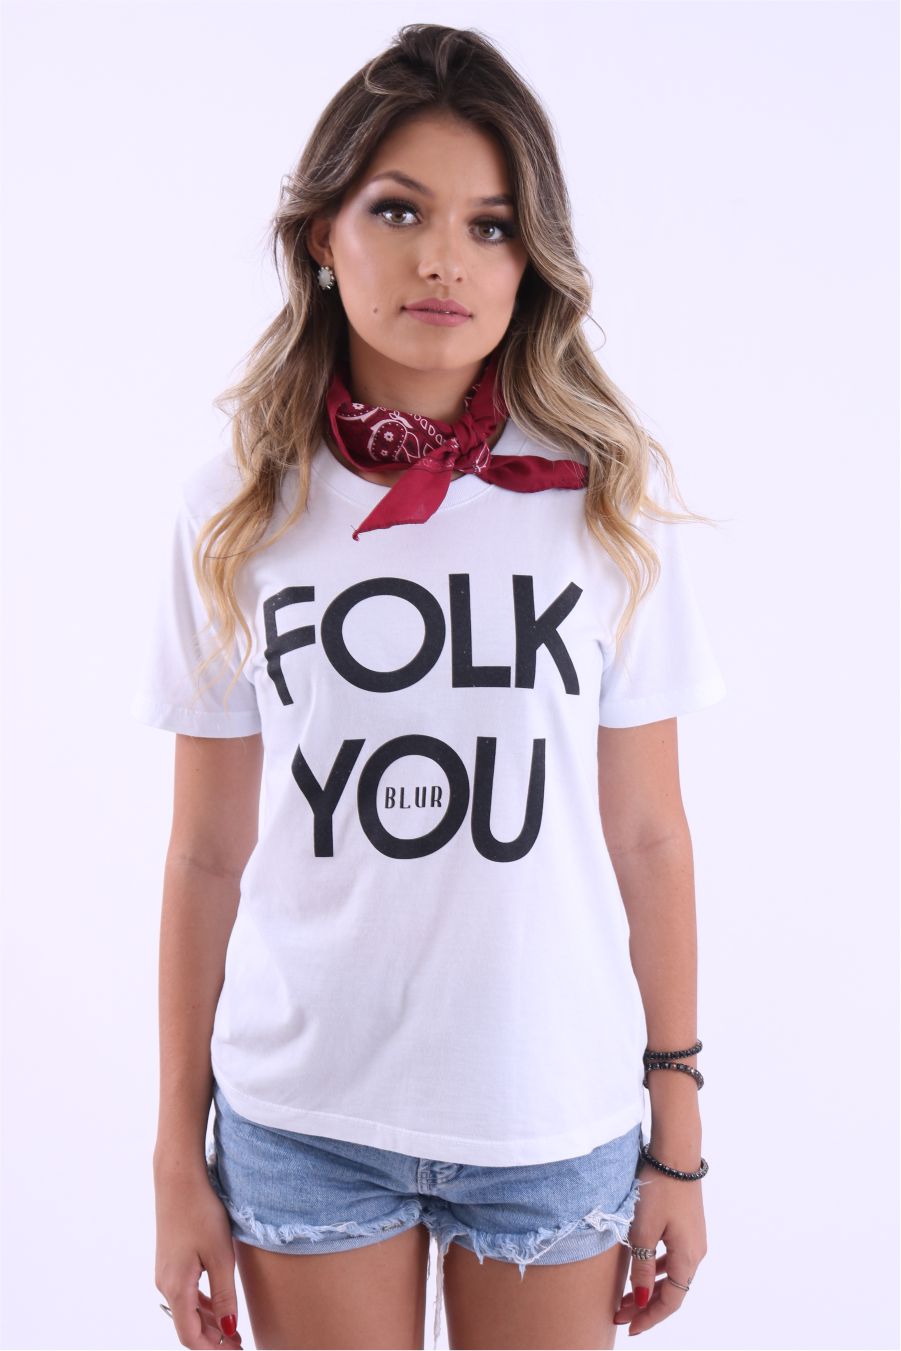 Camiseta Feminina Folk You Blur by Little Rock